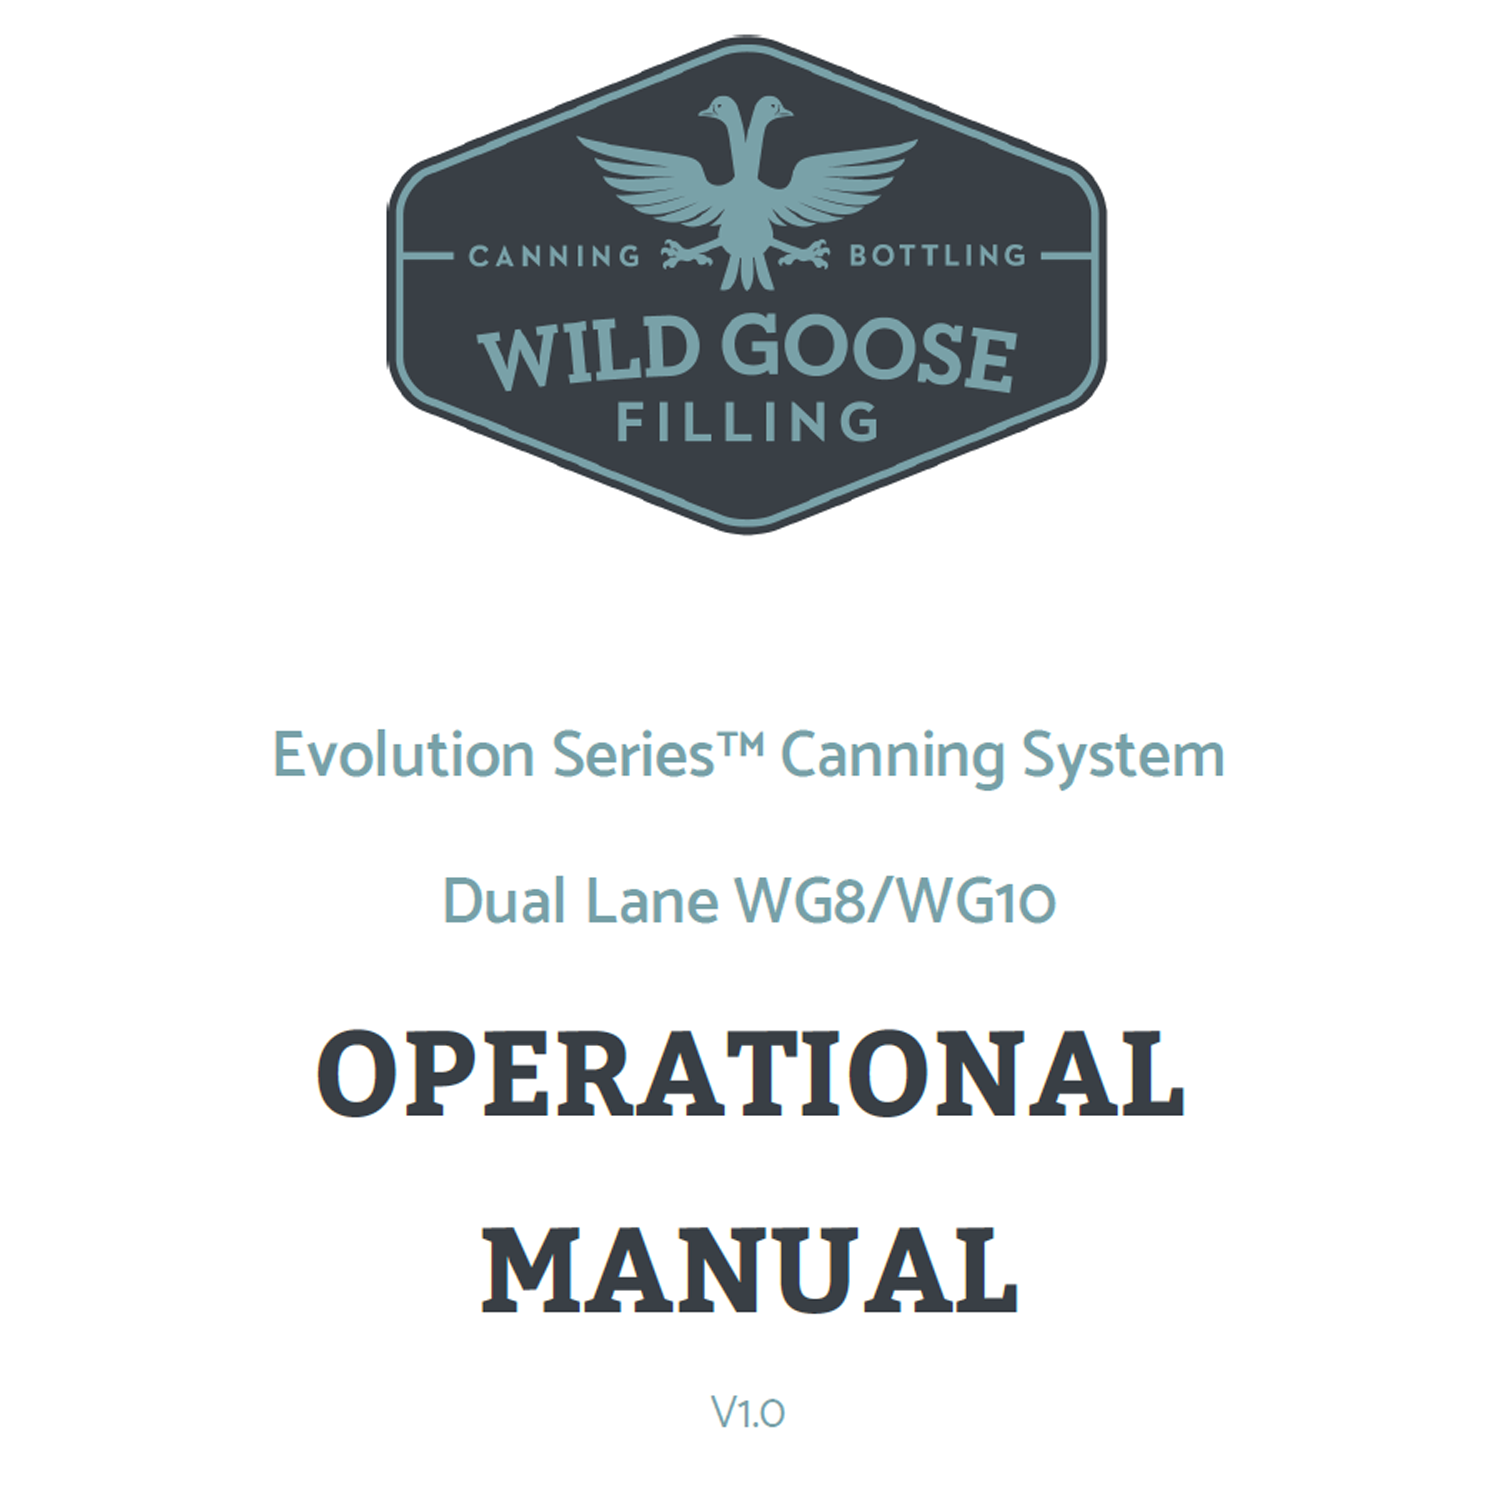 Dual Lane WG8/WG10 Operational Manual